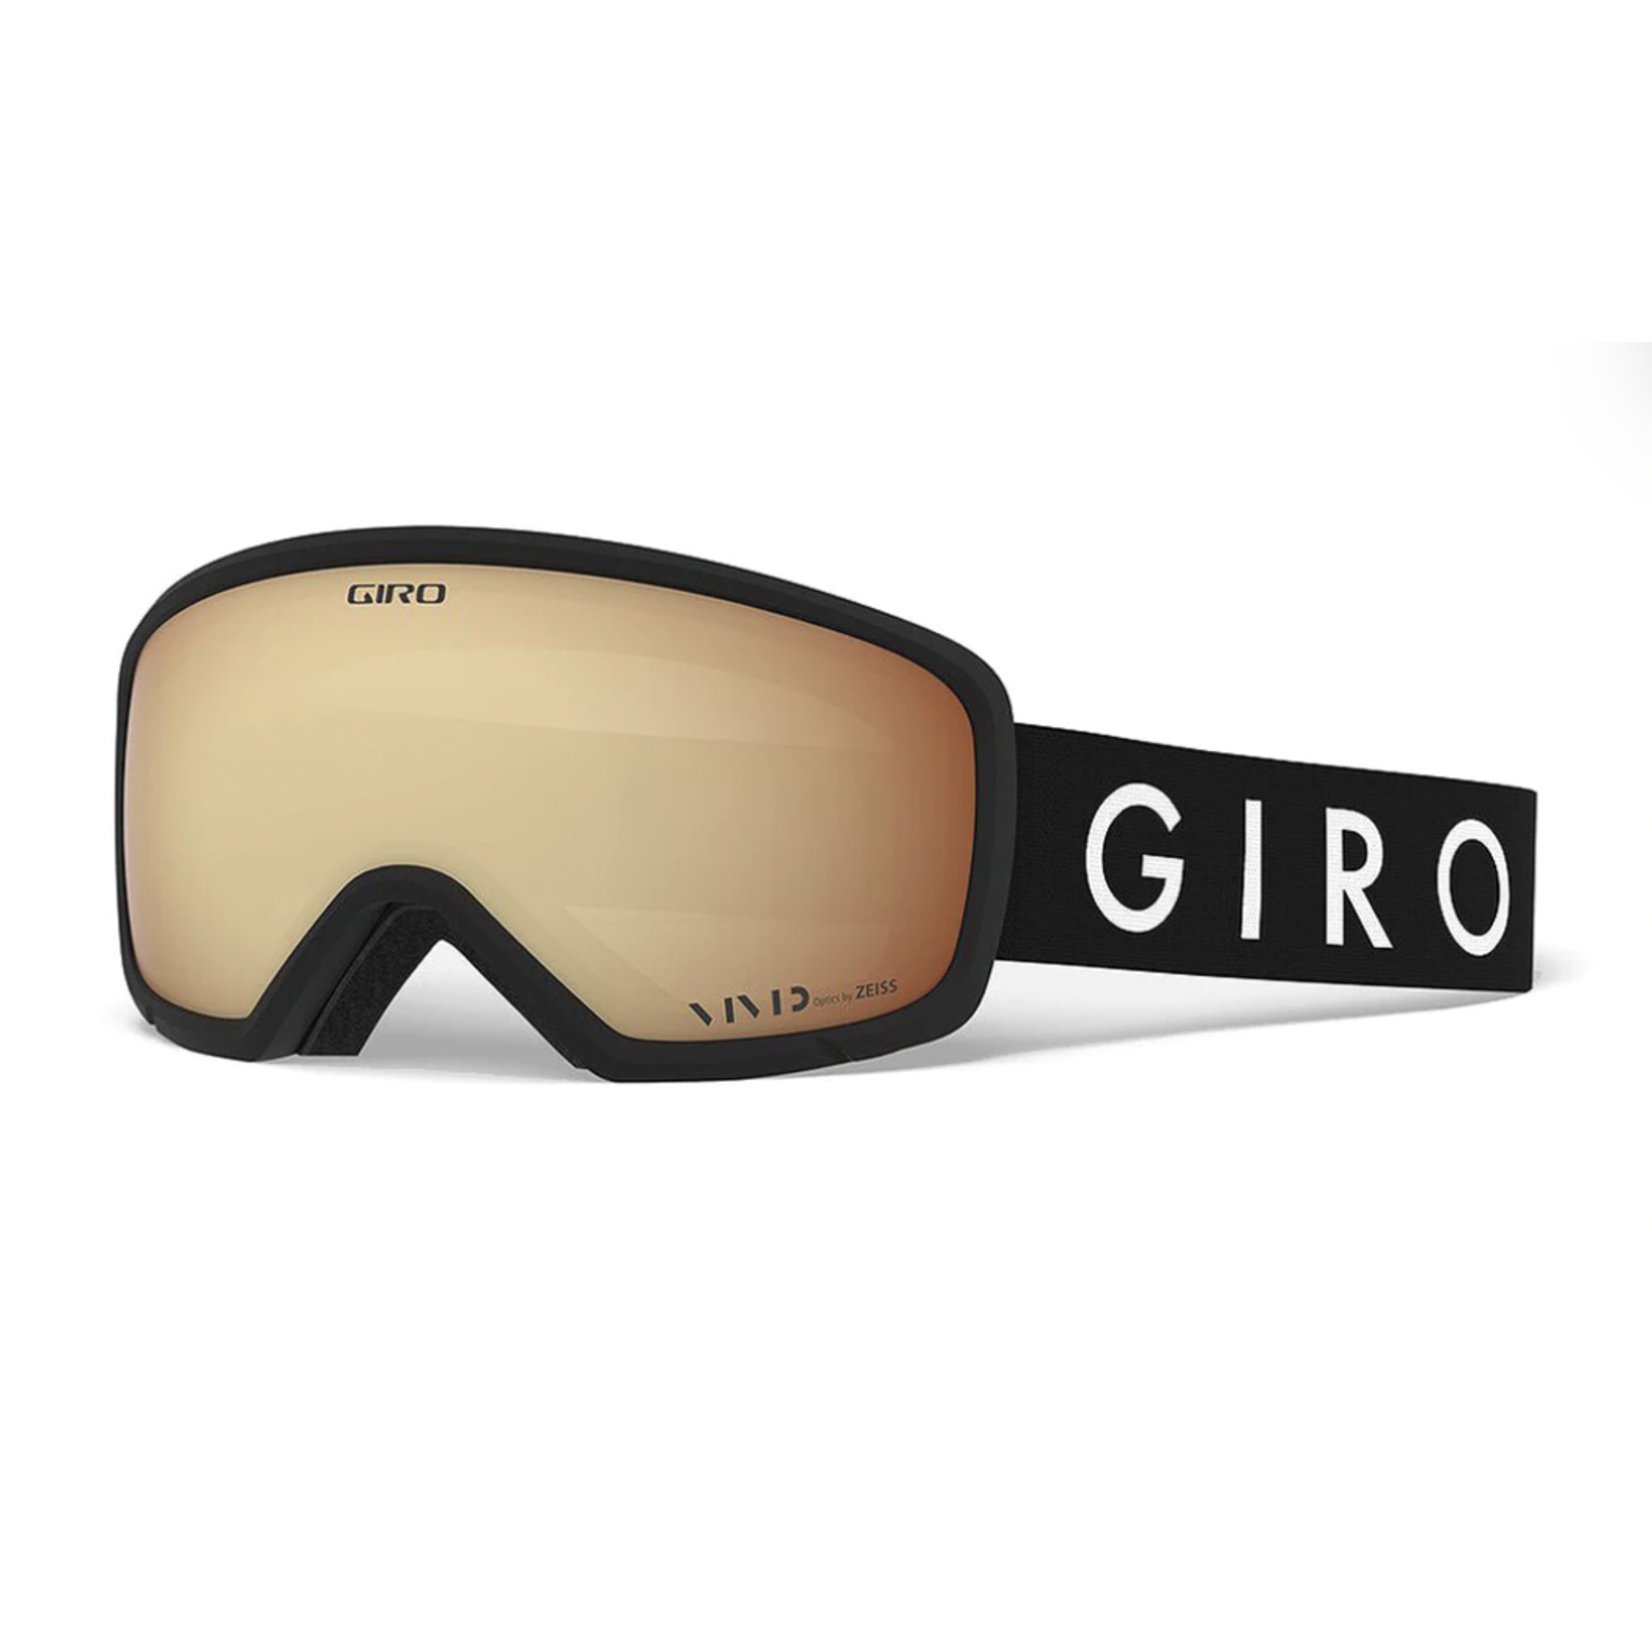 GIRO Millie lunette de ski pour femme - Vertige Vélo Ski